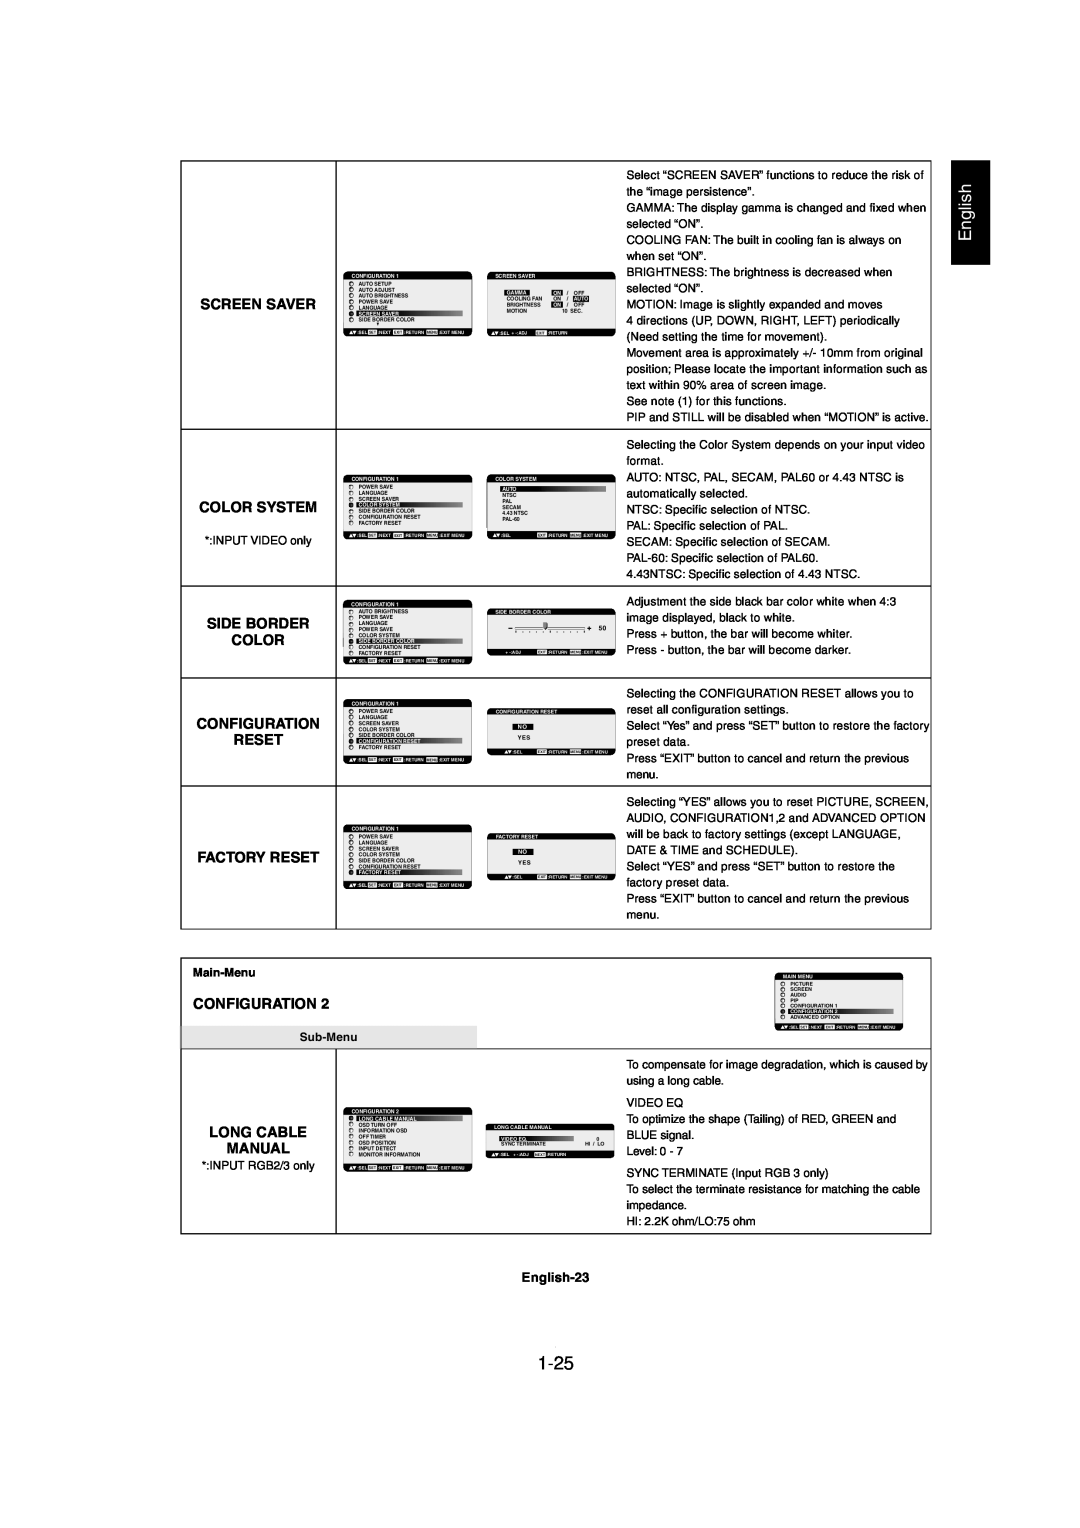 Mitsubishi Electronics MDT321S user manual 1-25, English-23, INPUT RGB2/3 only, Level 0 SYNC TERMINATE Input RGB 3 only 